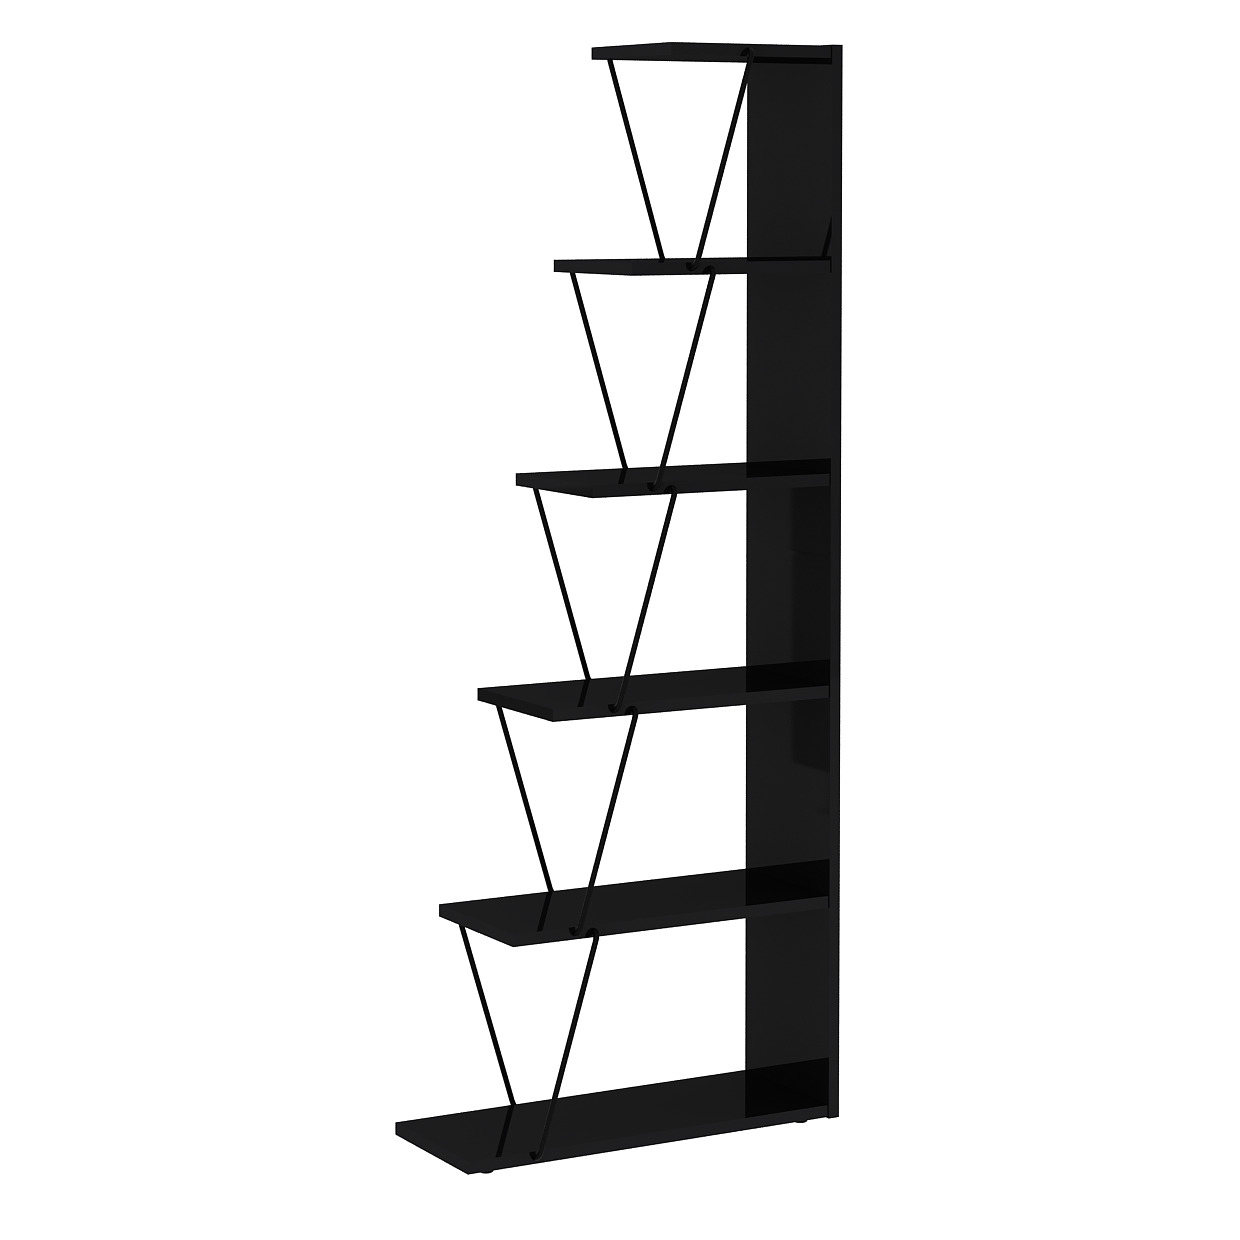 Kodu Damia 5 Tier Ladder Bookshelf Reviews Temple Webster